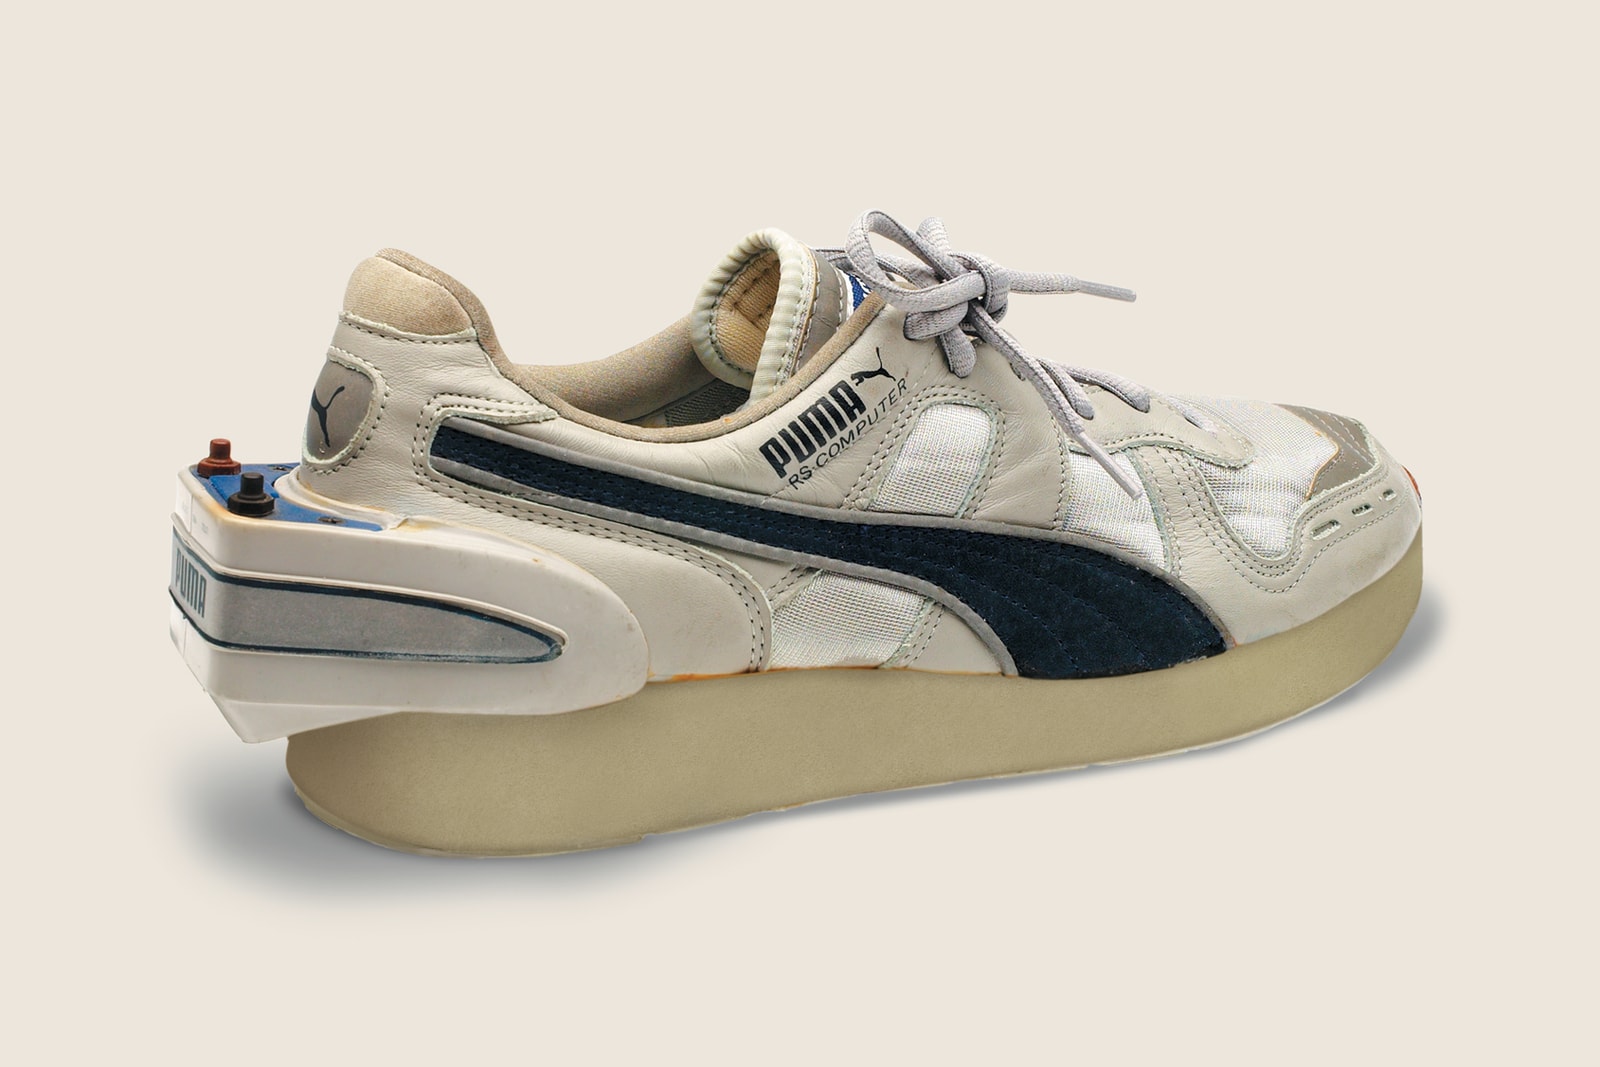 Puma scend кроссовки. Puma RS Computer Shoe 1986. Puma RS Computer Shoe 2018. Кроссовки Puma (модель - Guillermo Vilas Special). Пума кроссовки 1986.